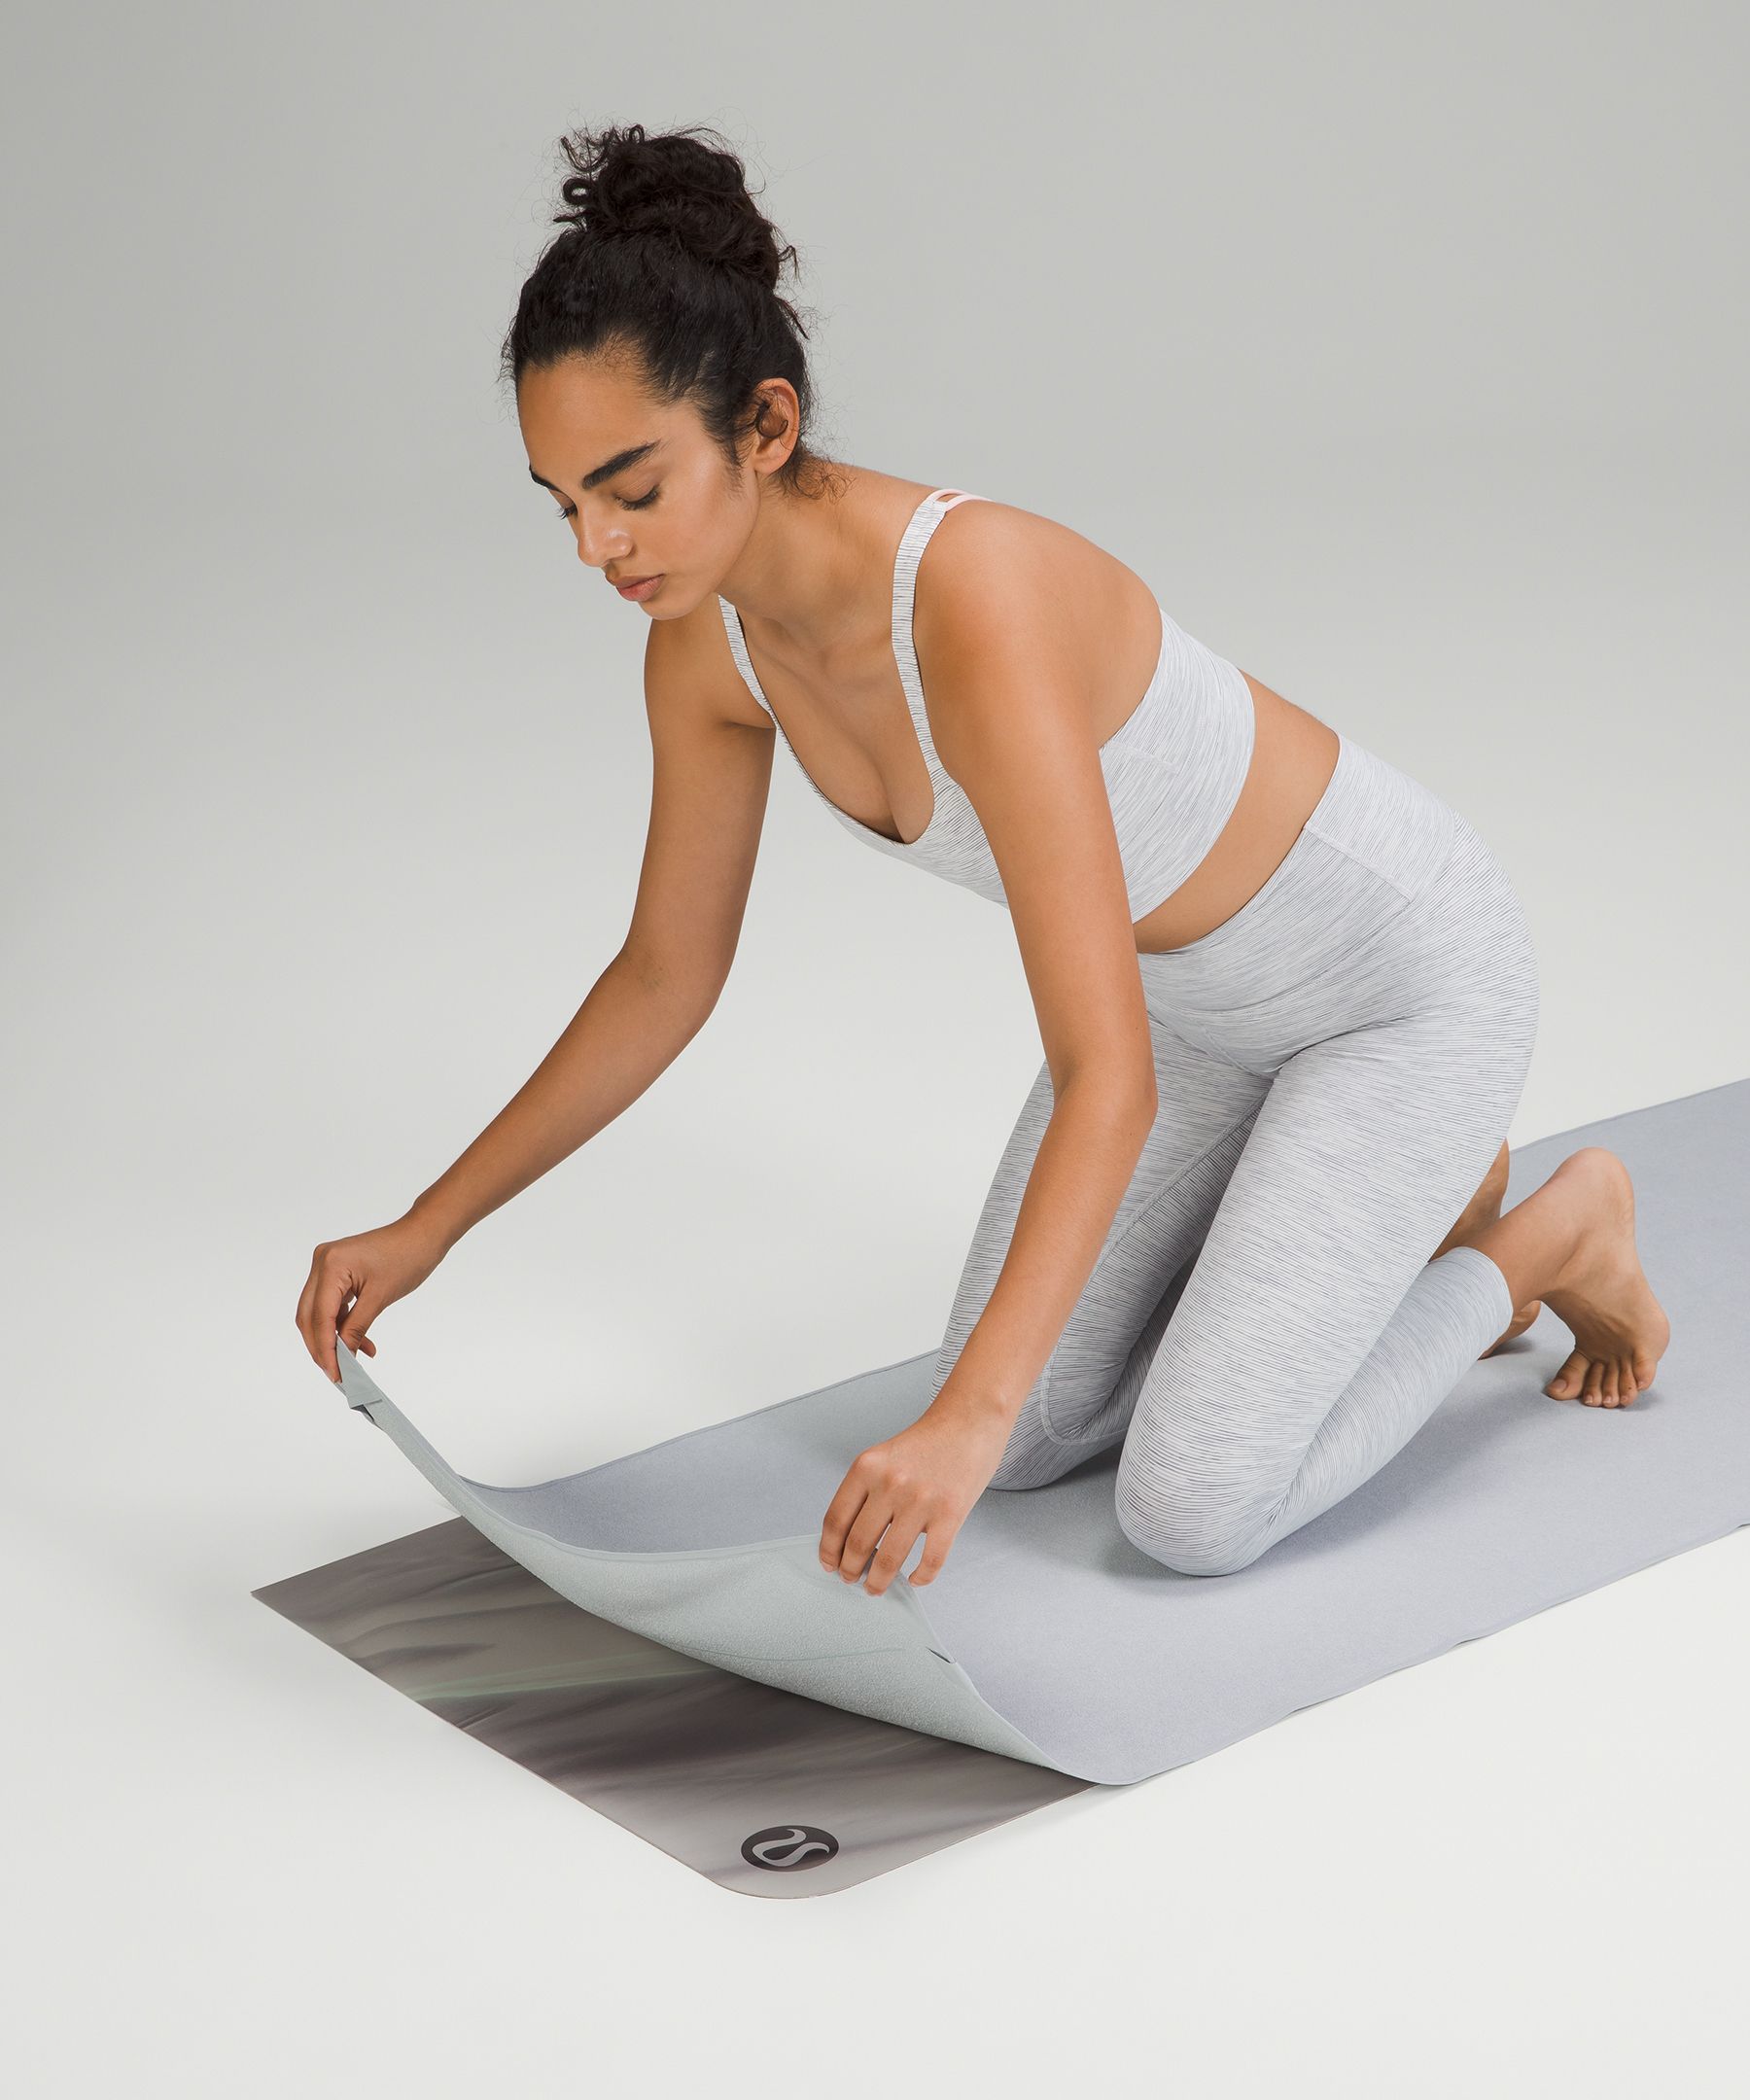 Best Yoga Mat Towel - Celestial - Yoga Mat Towel with grip for yoga